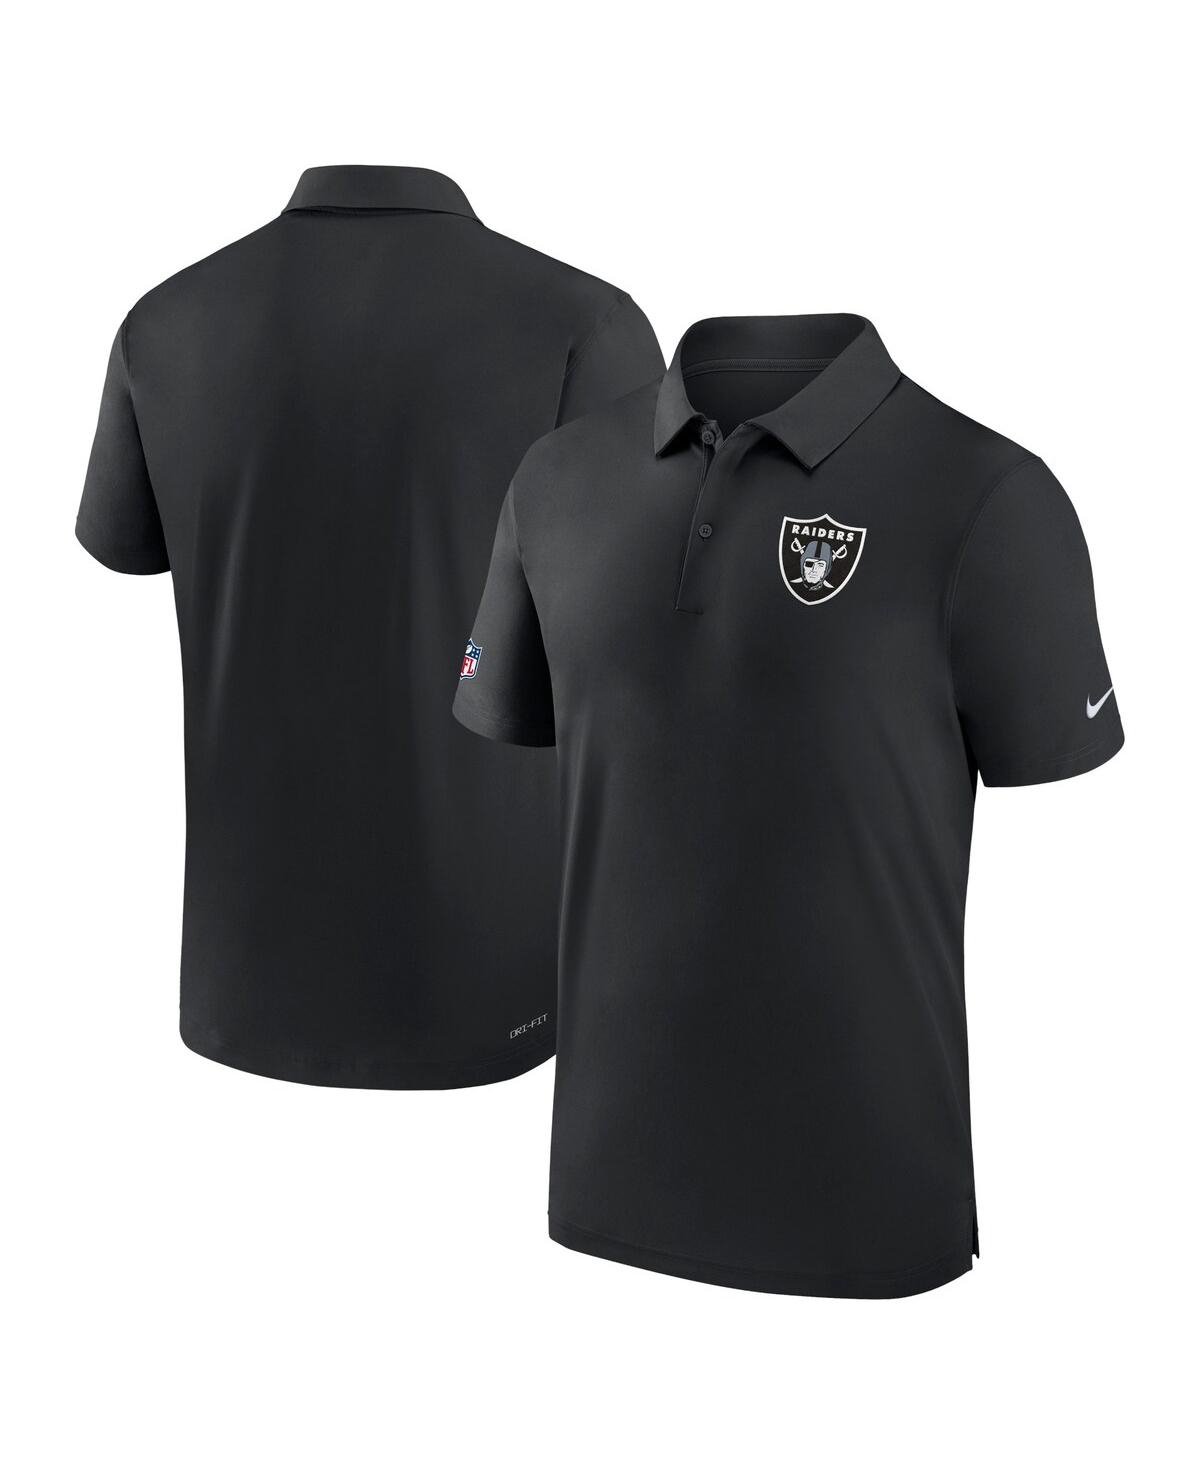 Shop Nike Men's  Black Las Vegas Raiders Sideline Coaches Performance Polo Shirt